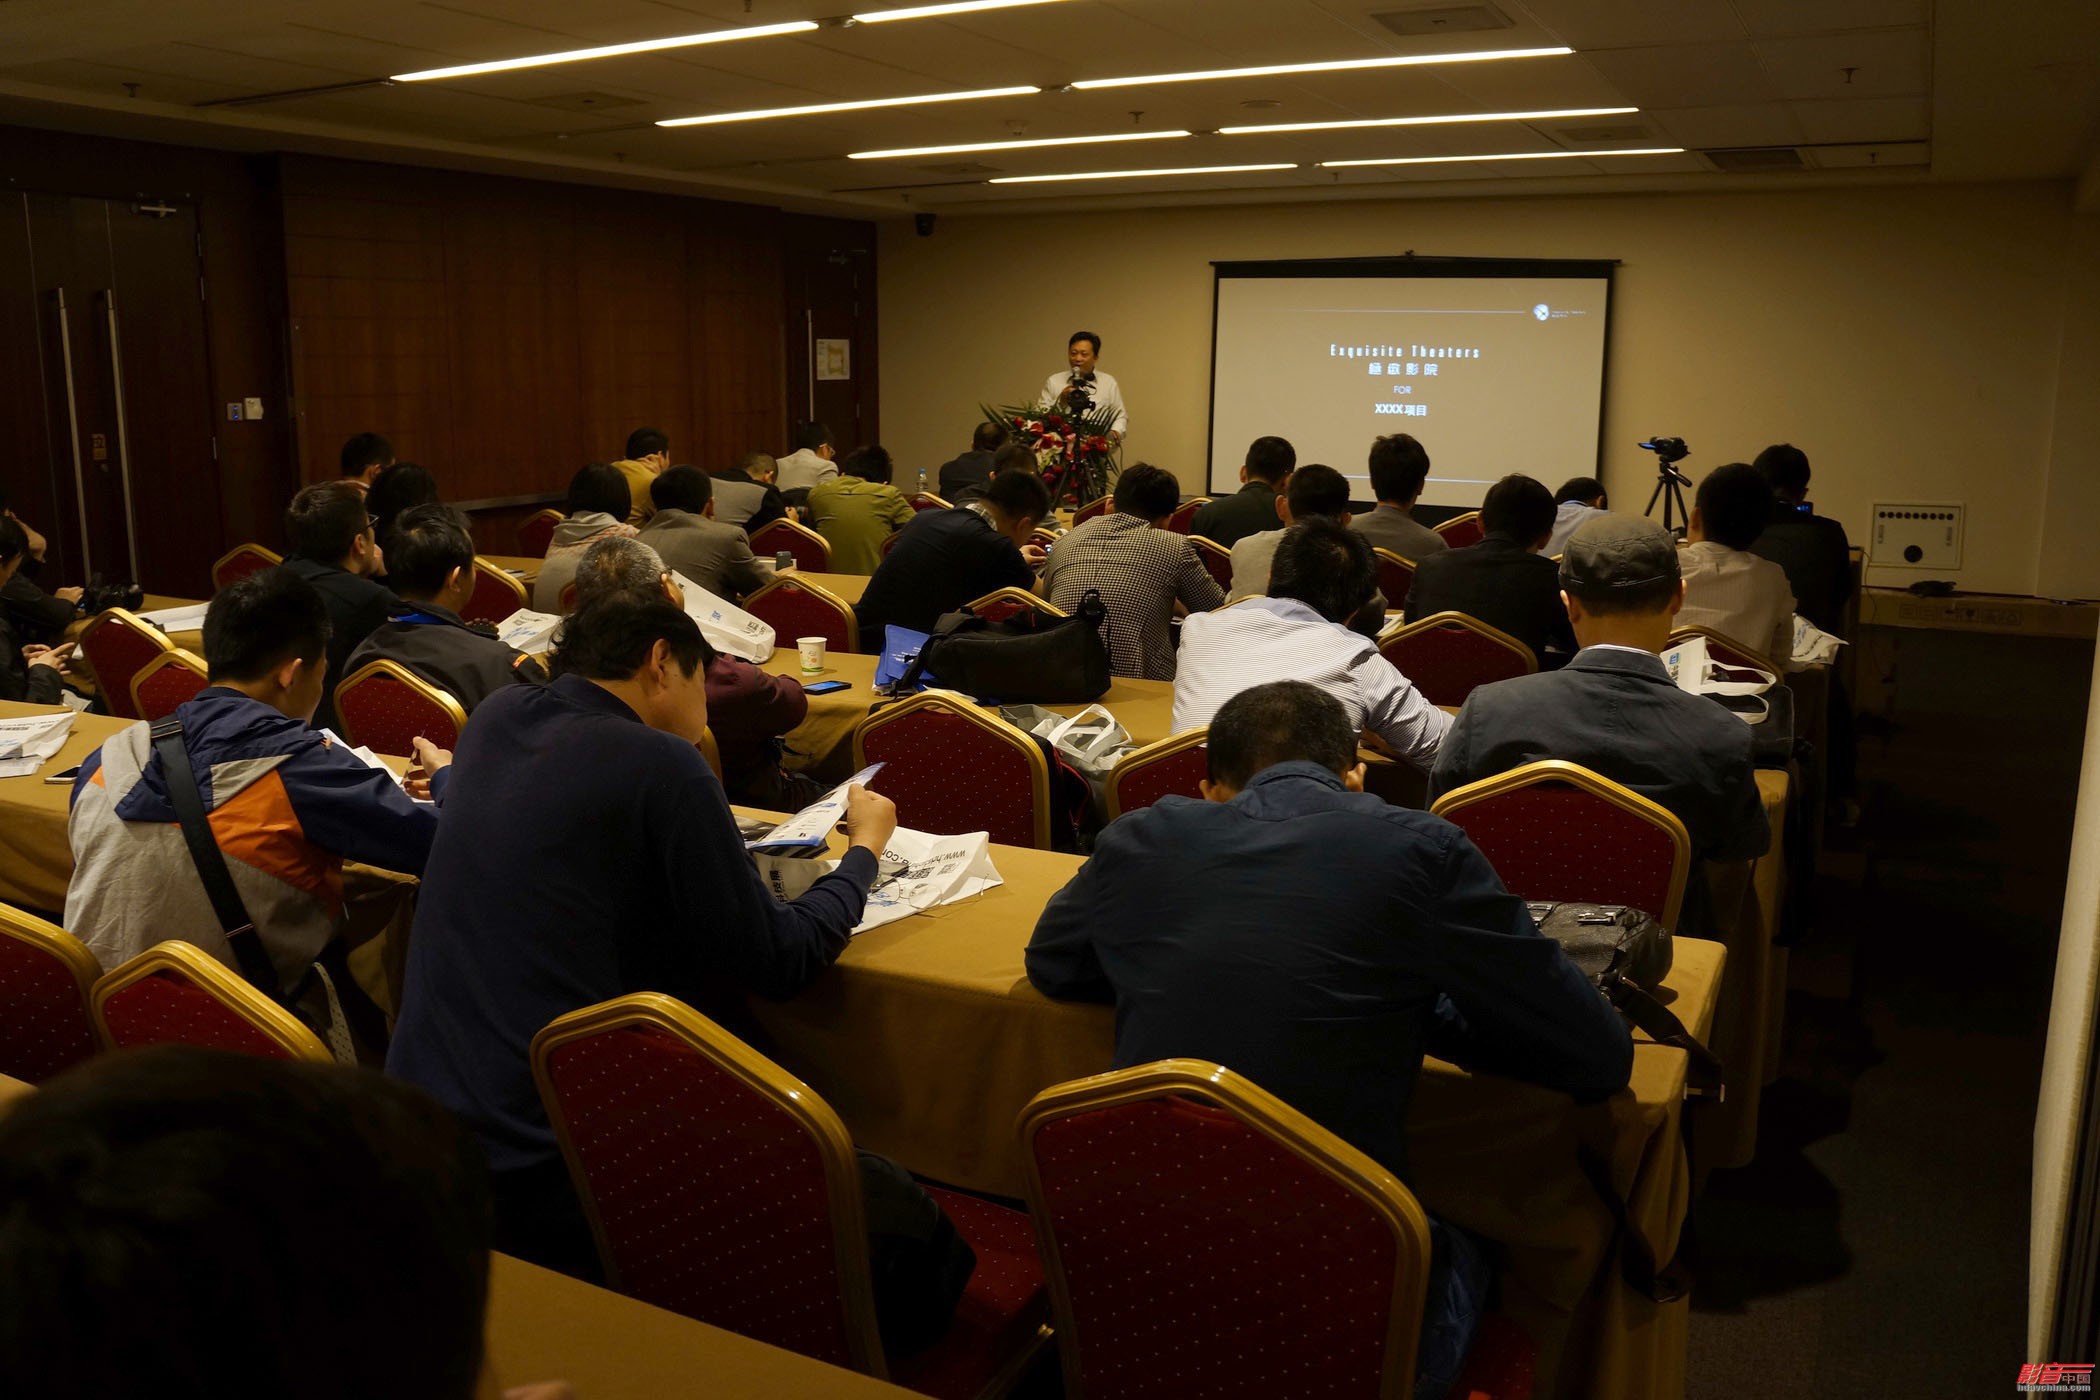 CIT2014中国智能影音市场与技术系列讲座系列报道(5月9日)